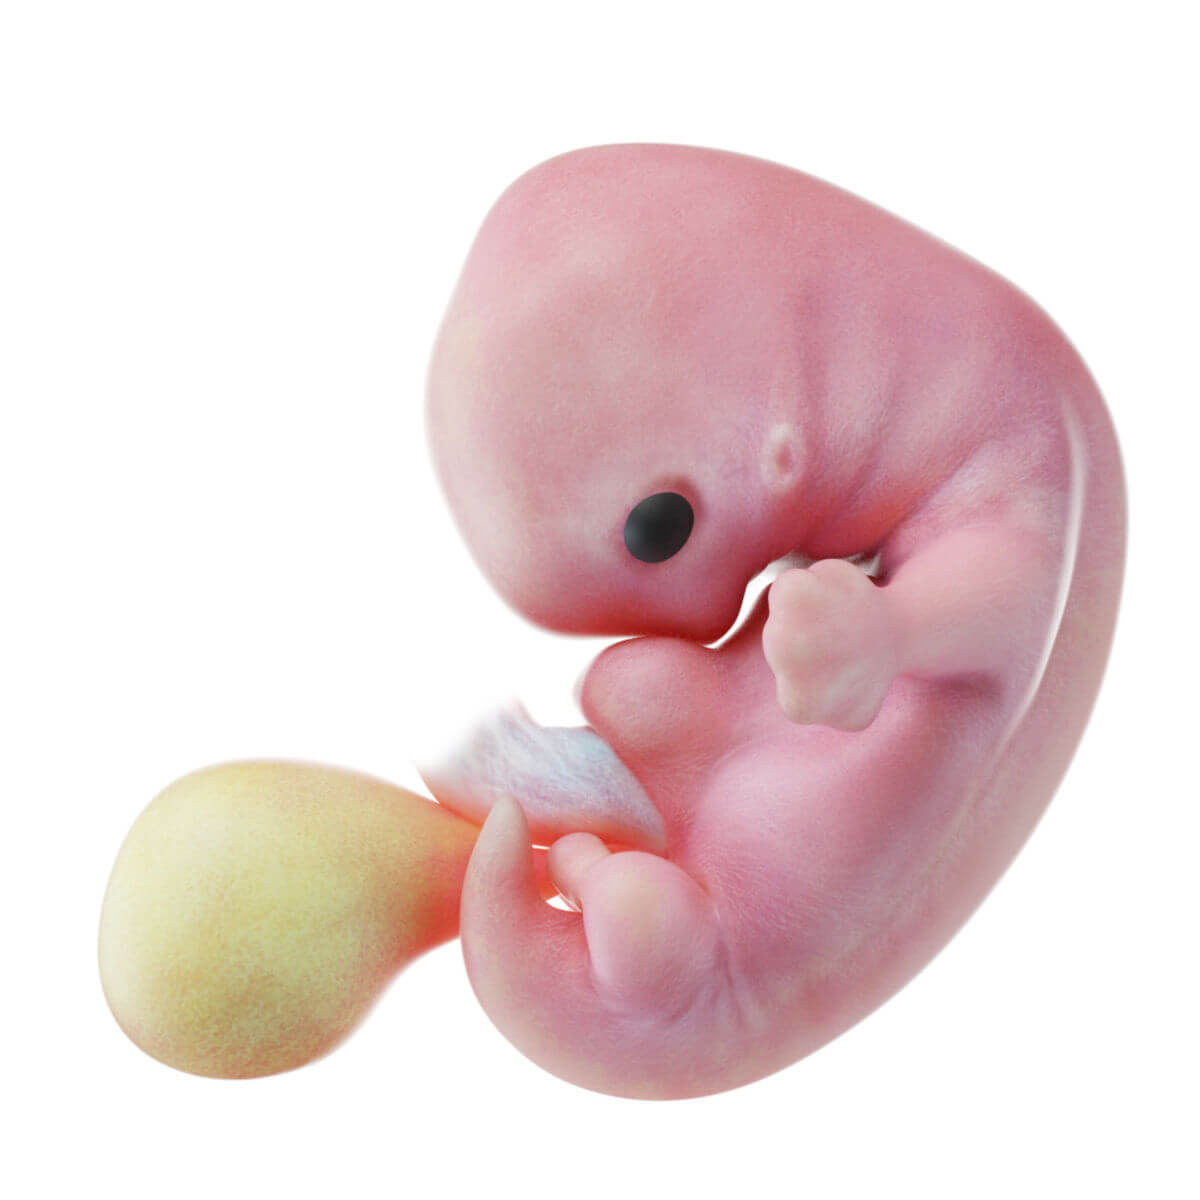 Embryogenese (7. SSW)